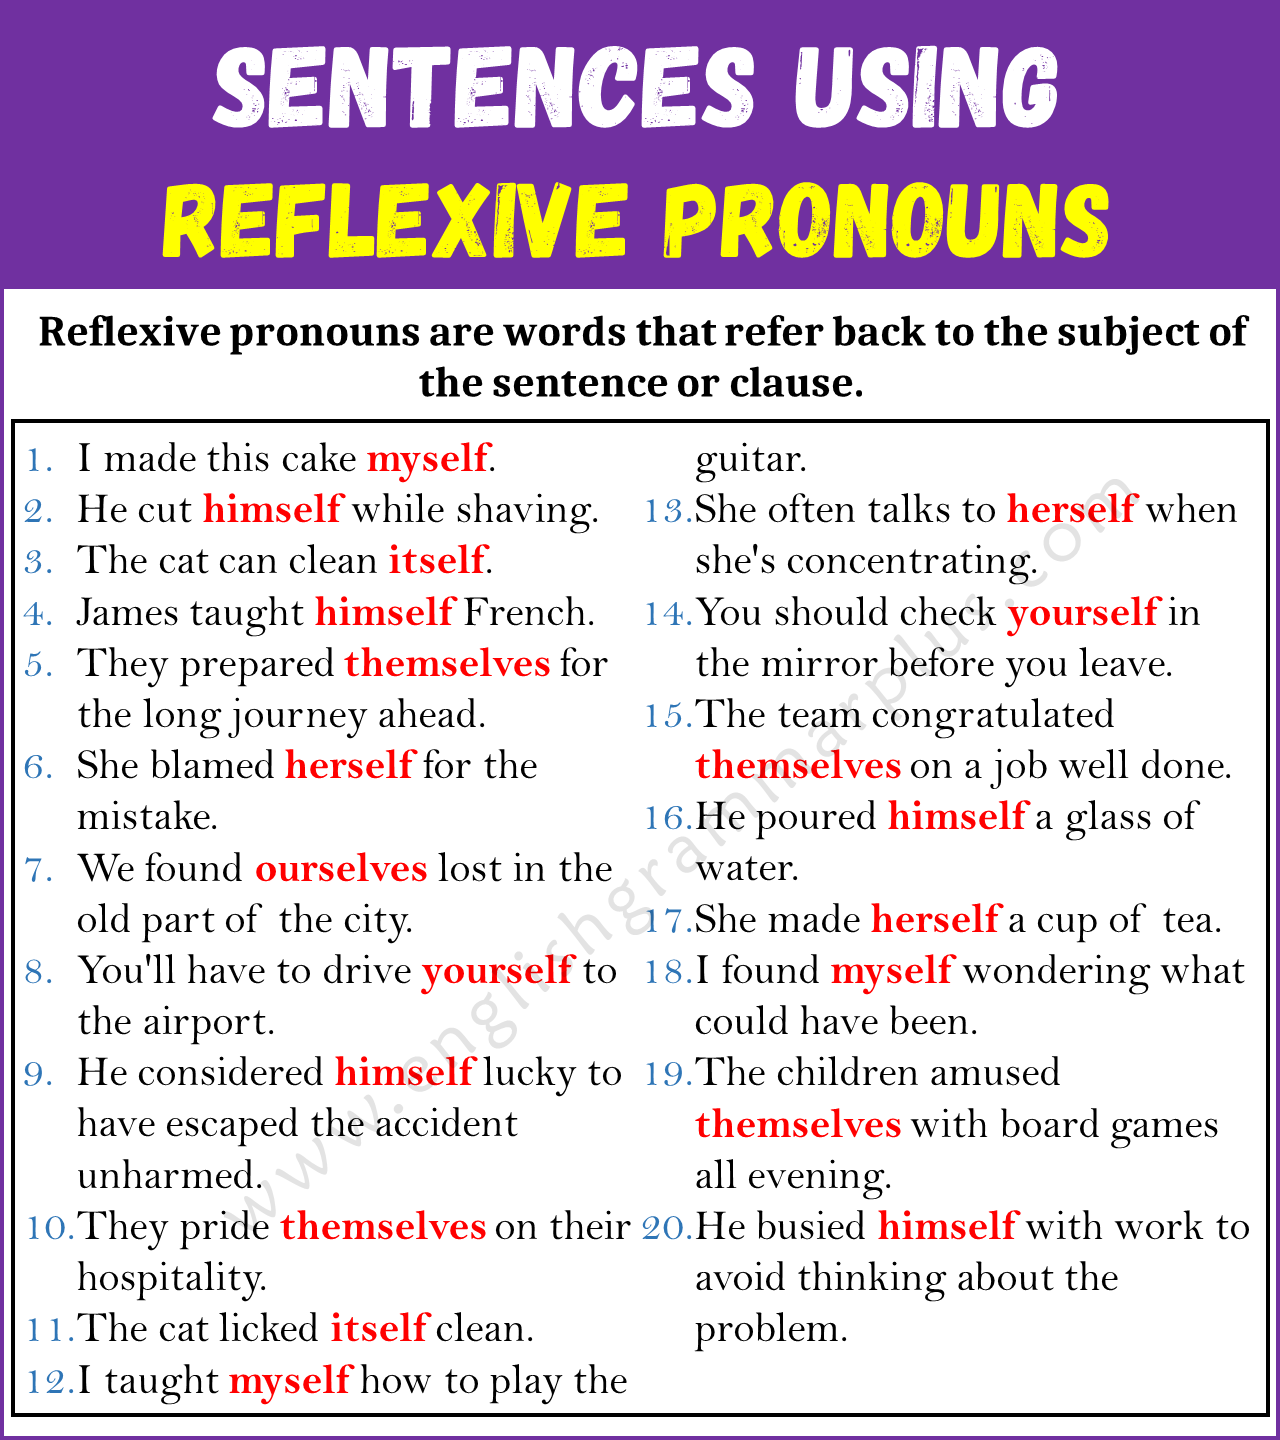 Example Sentences Using Reflexive Pronouns